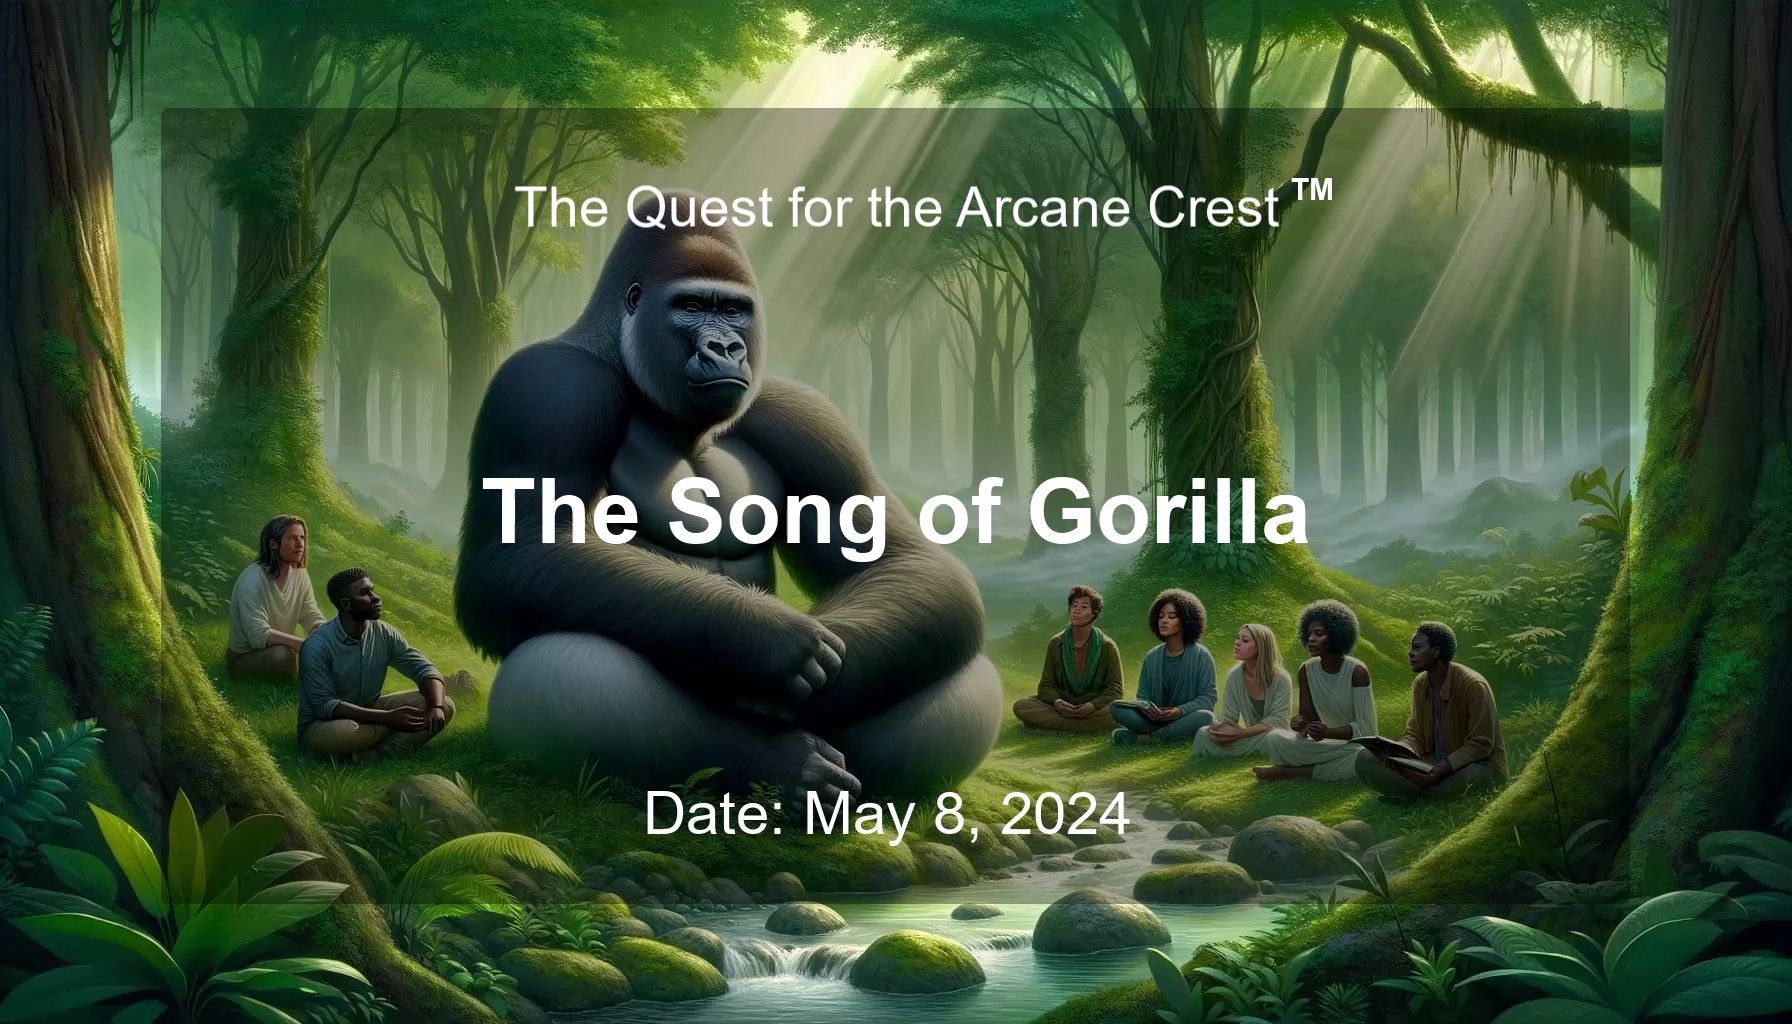 gorilla发音图片